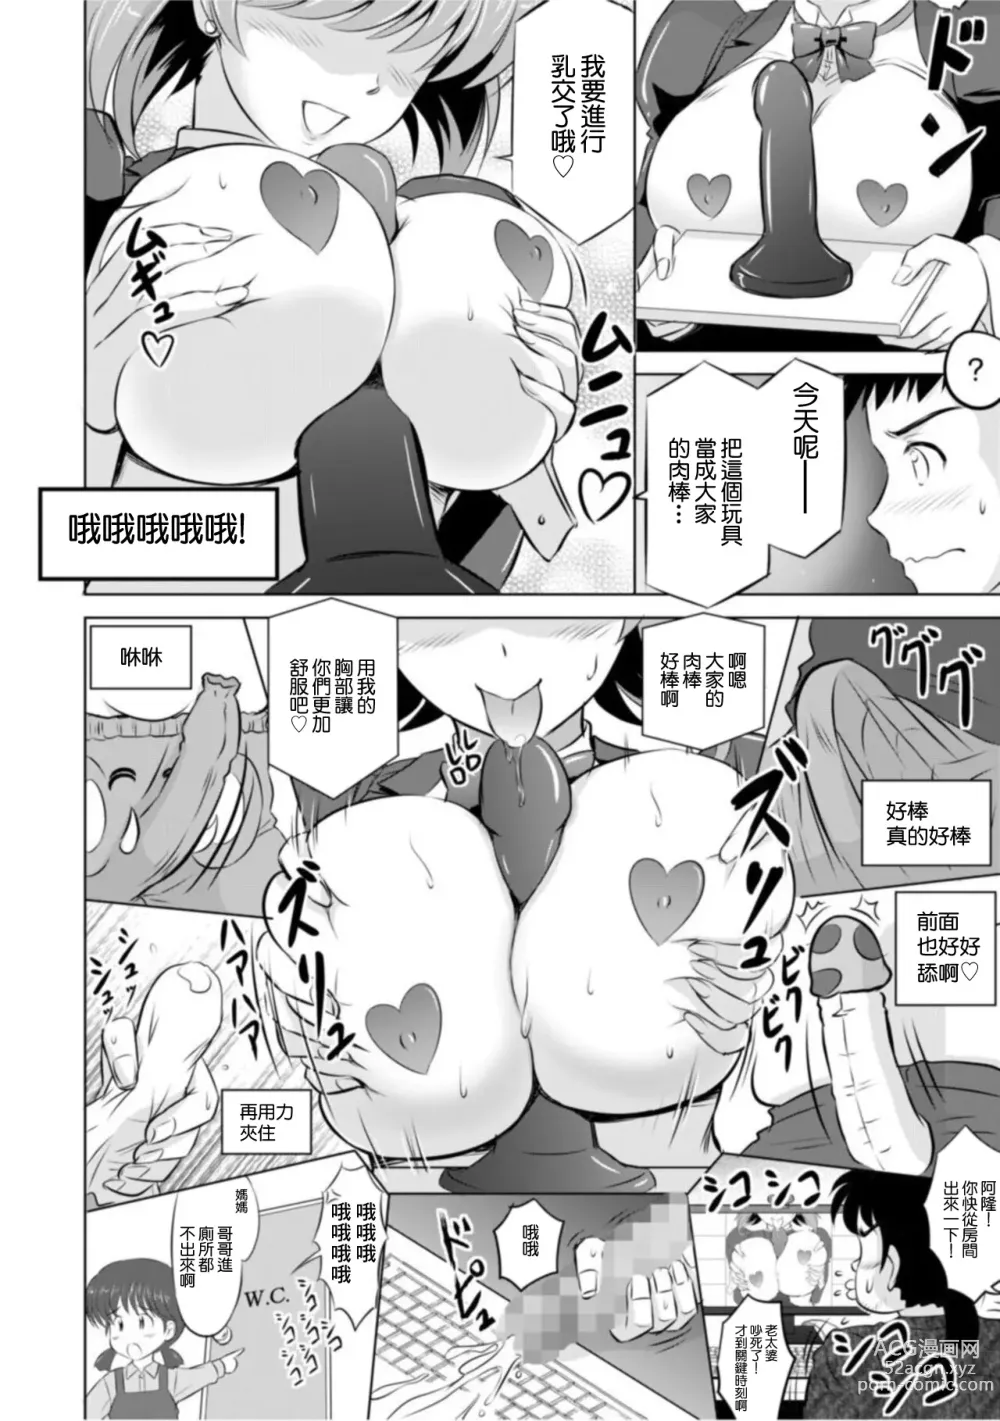 Page 10 of doujinshi 隔壁人妻對於Cosplay做愛非常擅長...